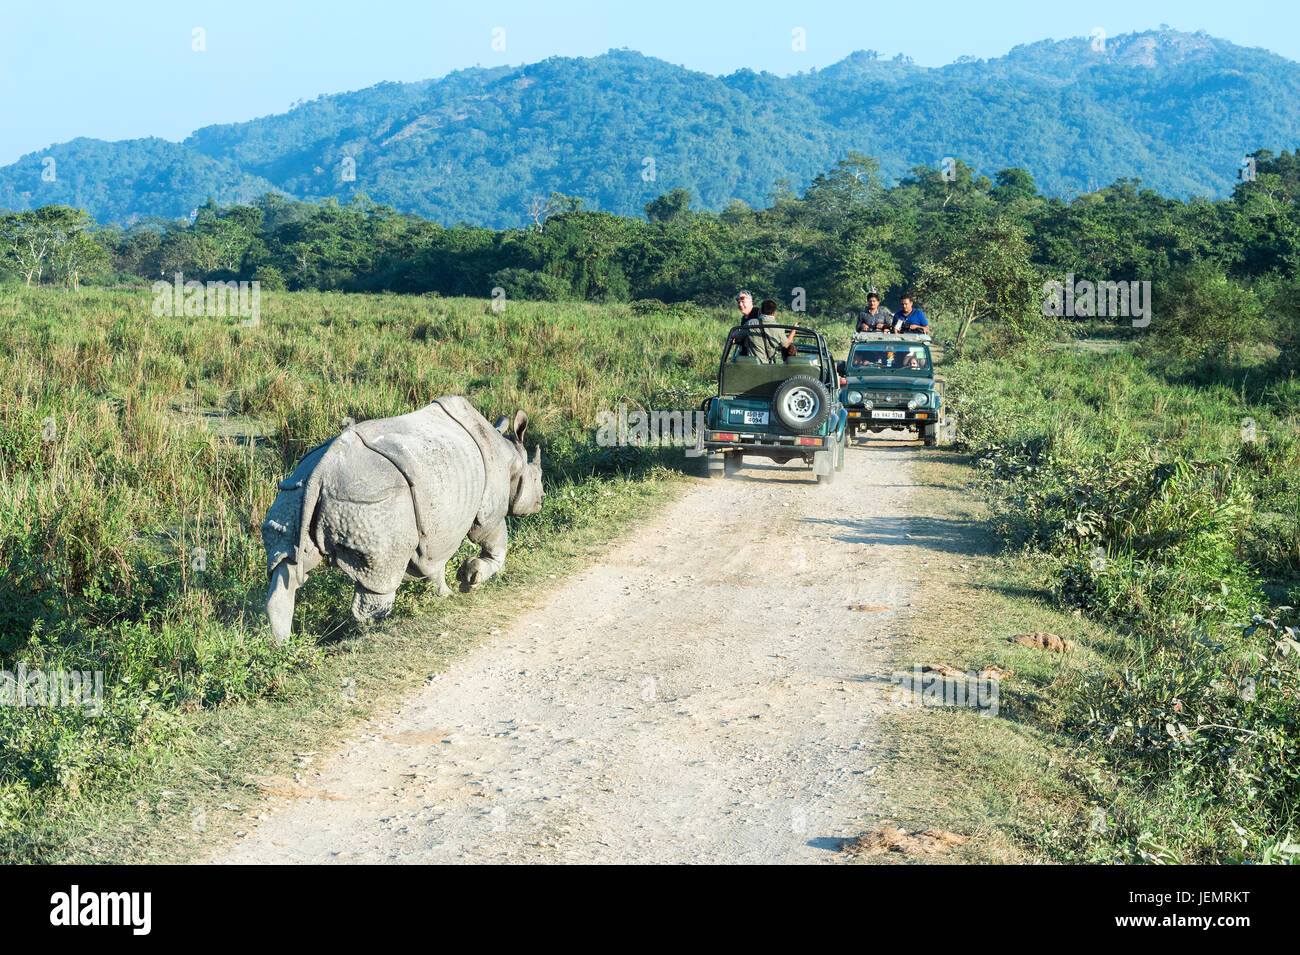 Rinoceronte indio (Rhinoceros unicornis) carga un vehículo con turistas, el Parque Nacional Kaziranga, Assam, India Foto de stock